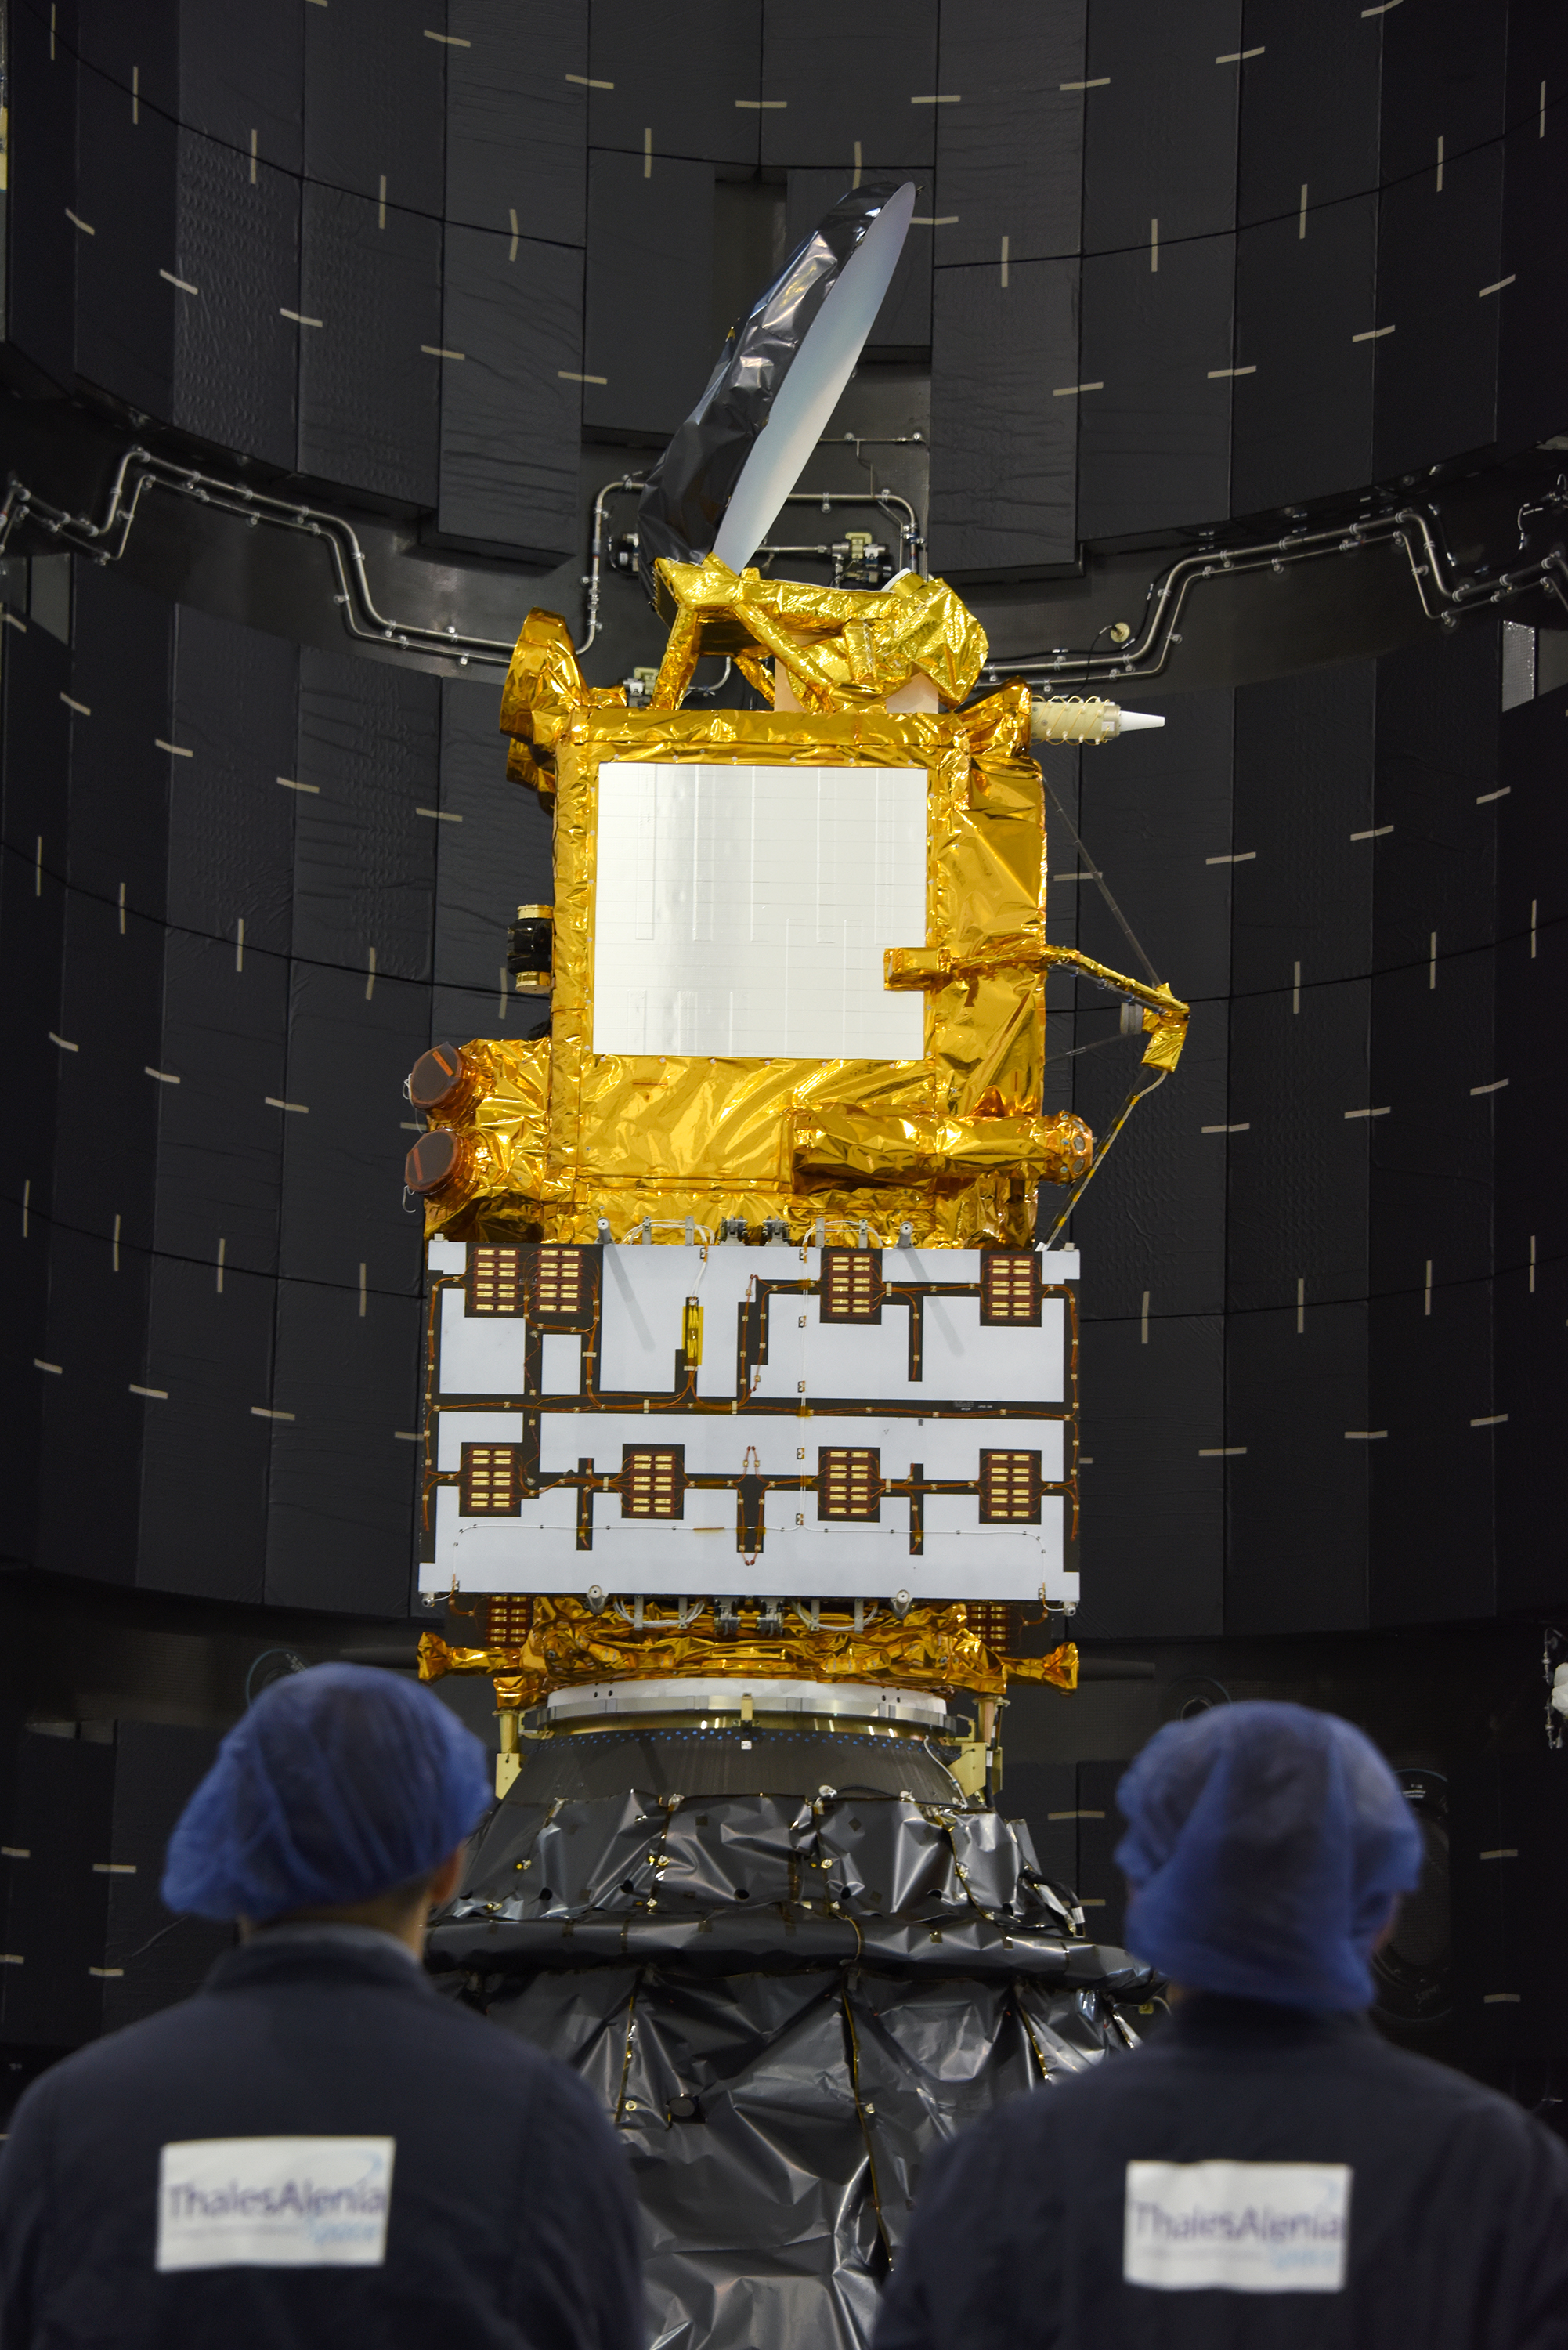 Jason-3 Satellite Prepared For Launch